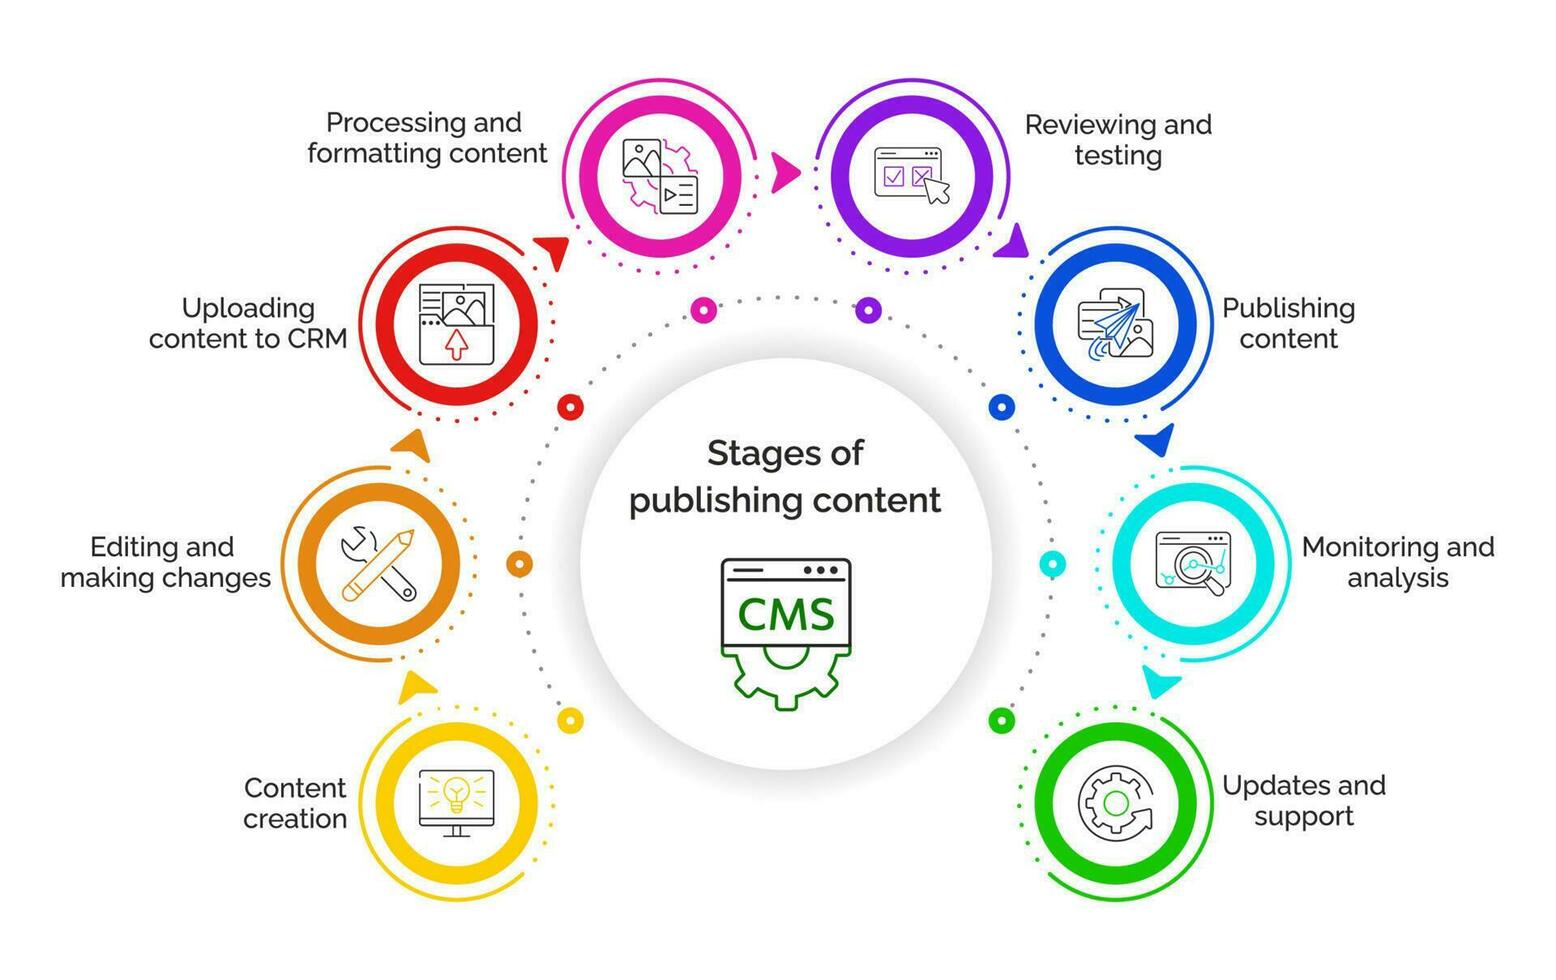 cms concepto. etapas de publicación contenido utilizando cms. gráfico con palabras clave y iconos sitio web administración software para publicación contenido, editar, seo mejoramiento, configuración, apoyo. infografía. vector